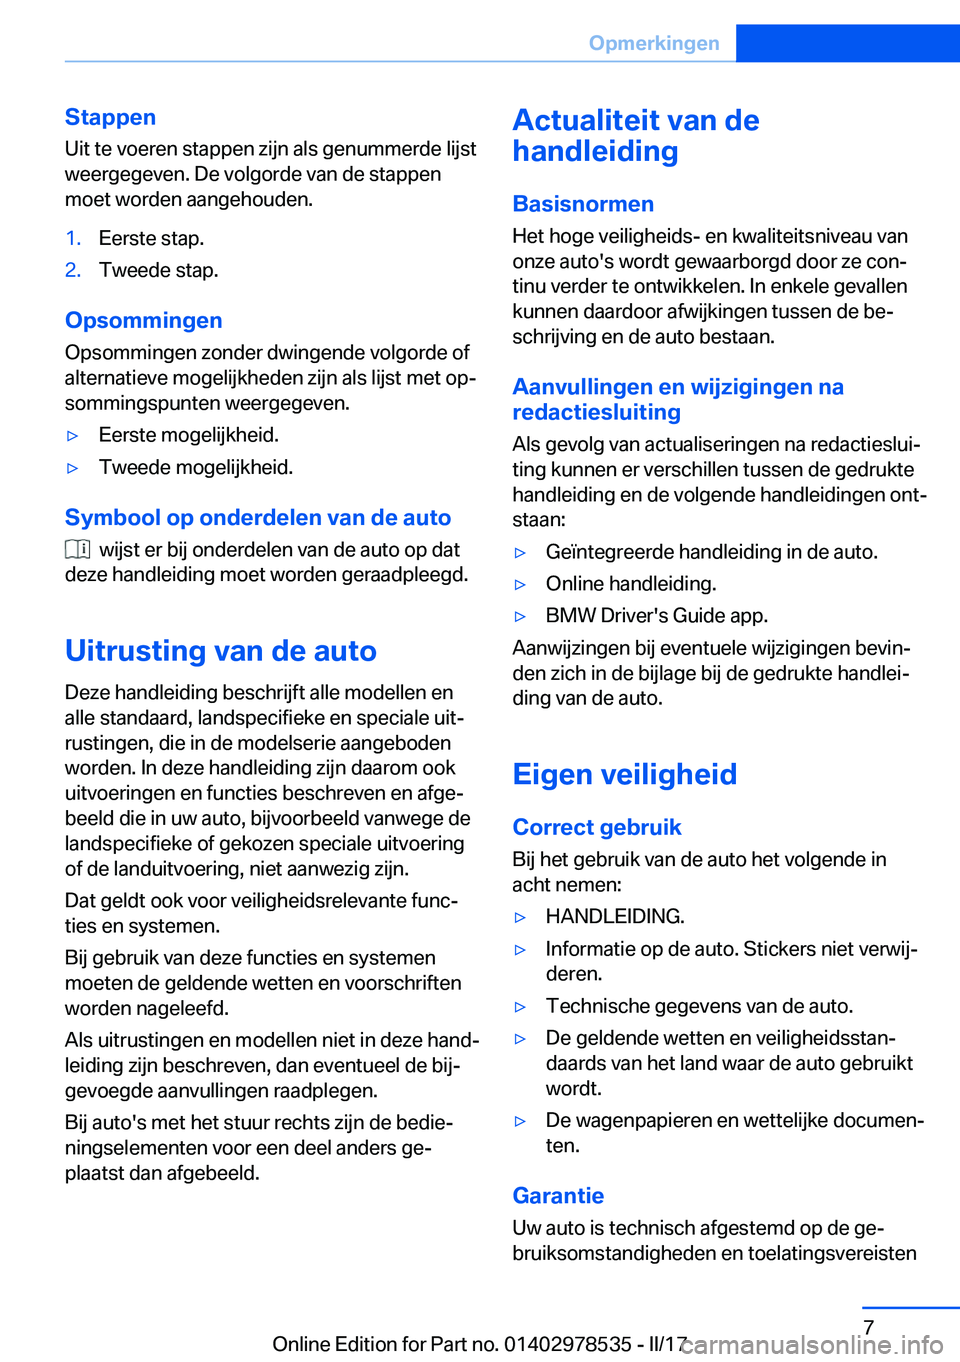 BMW X6 M 2017  Instructieboekjes (in Dutch) �S�t�a�p�p�e�n
�U�i�t� �t�e� �v�o�e�r�e�n� �s�t�a�p�p�e�n� �z�i�j�n� �a�l�s� �g�e�n�u�m�m�e�r�d�e� �l�i�j�s�t �w�e�e�r�g�e�g�e�v�e�n�.� �D�e� �v�o�l�g�o�r�d�e� �v�a�n� �d�e� �s�t�a�p�p�e�n�m�o�e�t� �w